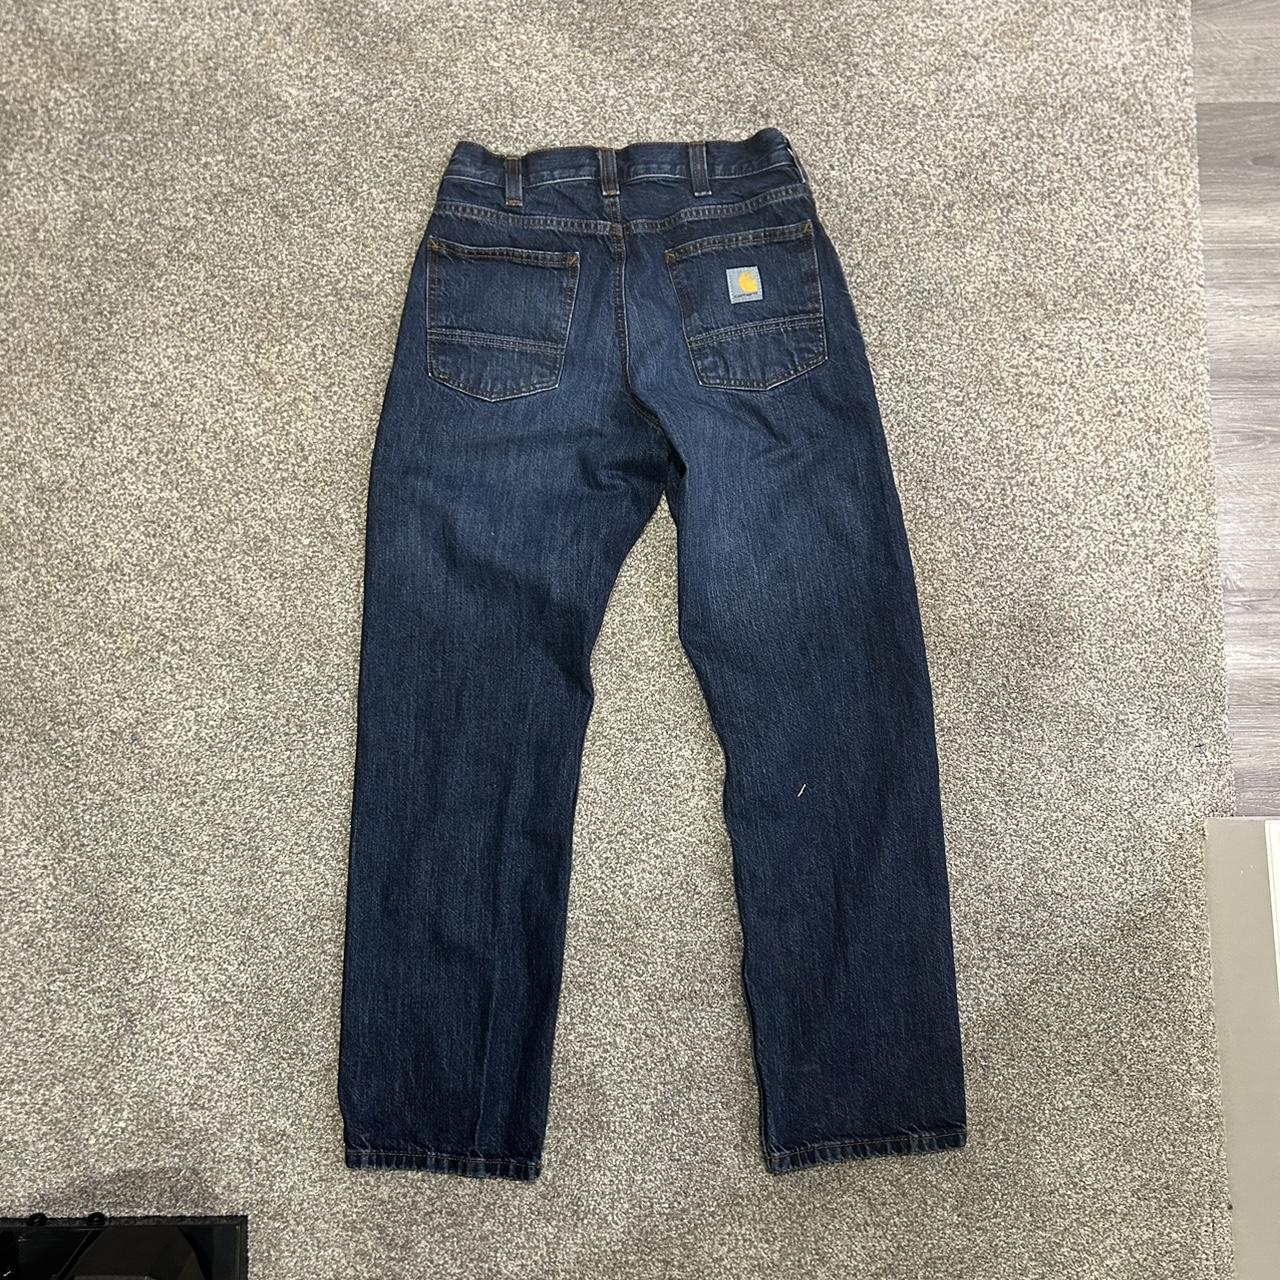 carhartt dark wash jeans 29x30 relaxed fit - Depop